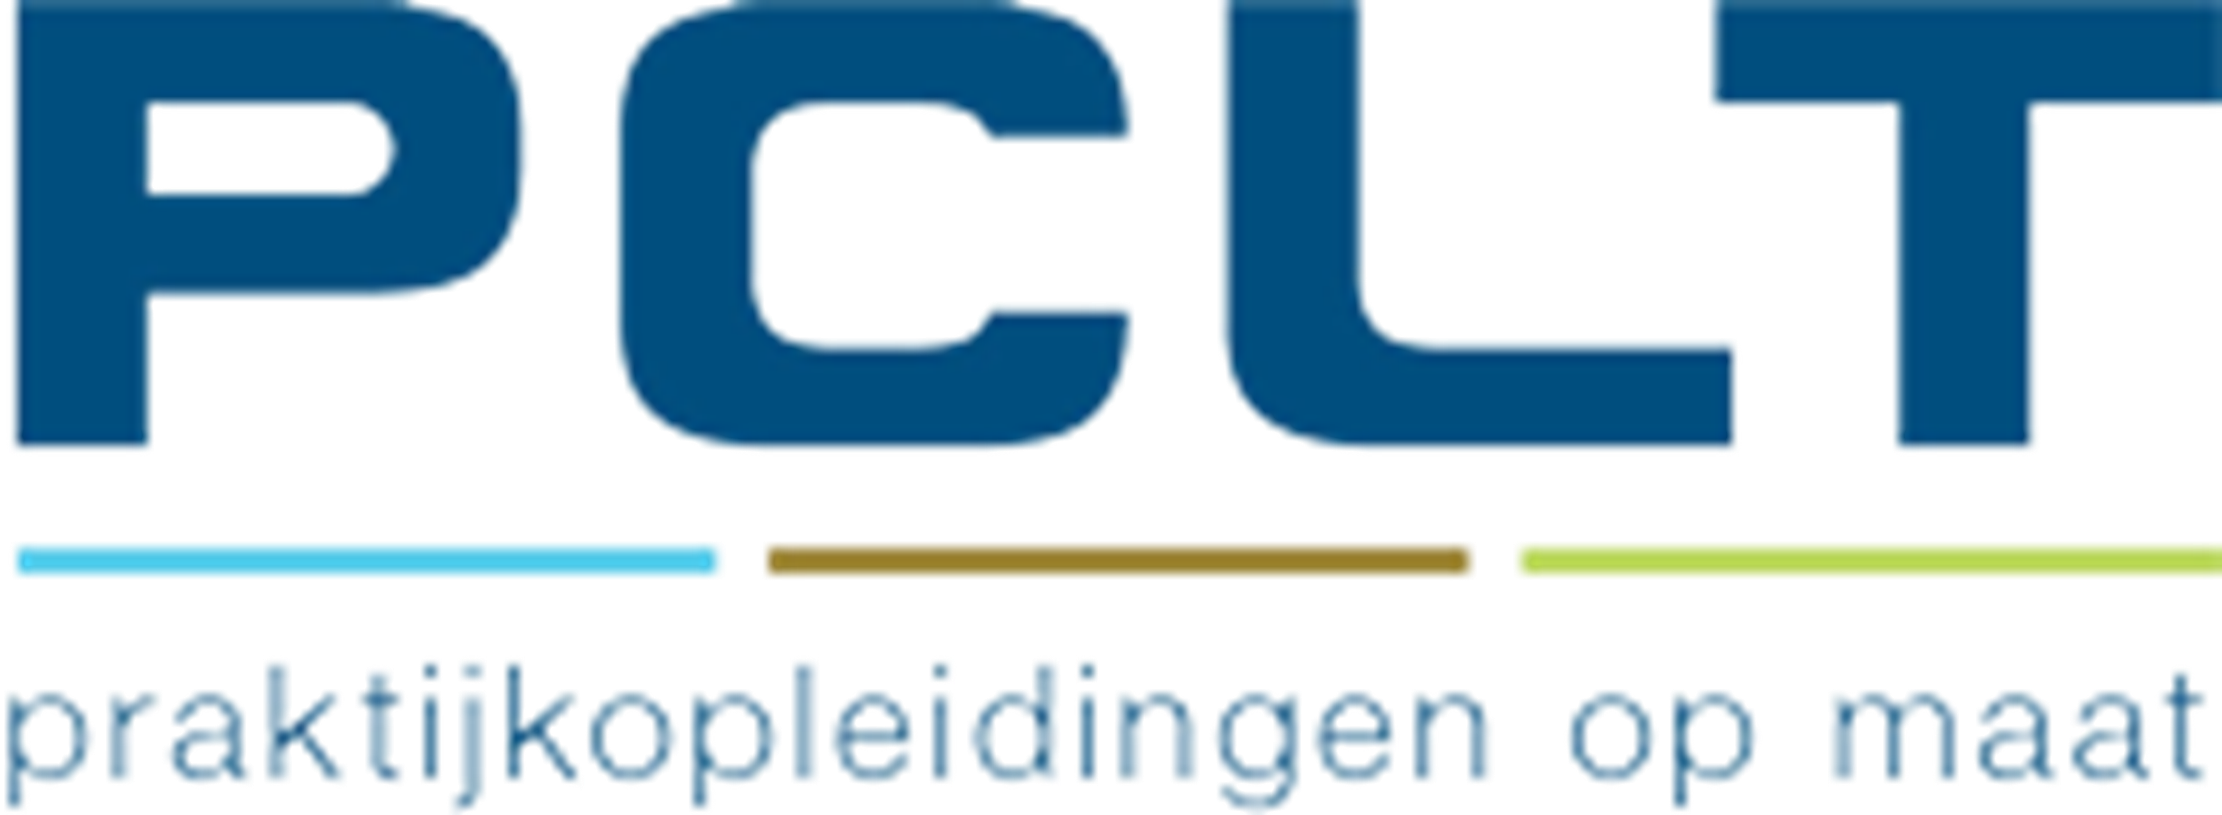 Logo PCLT